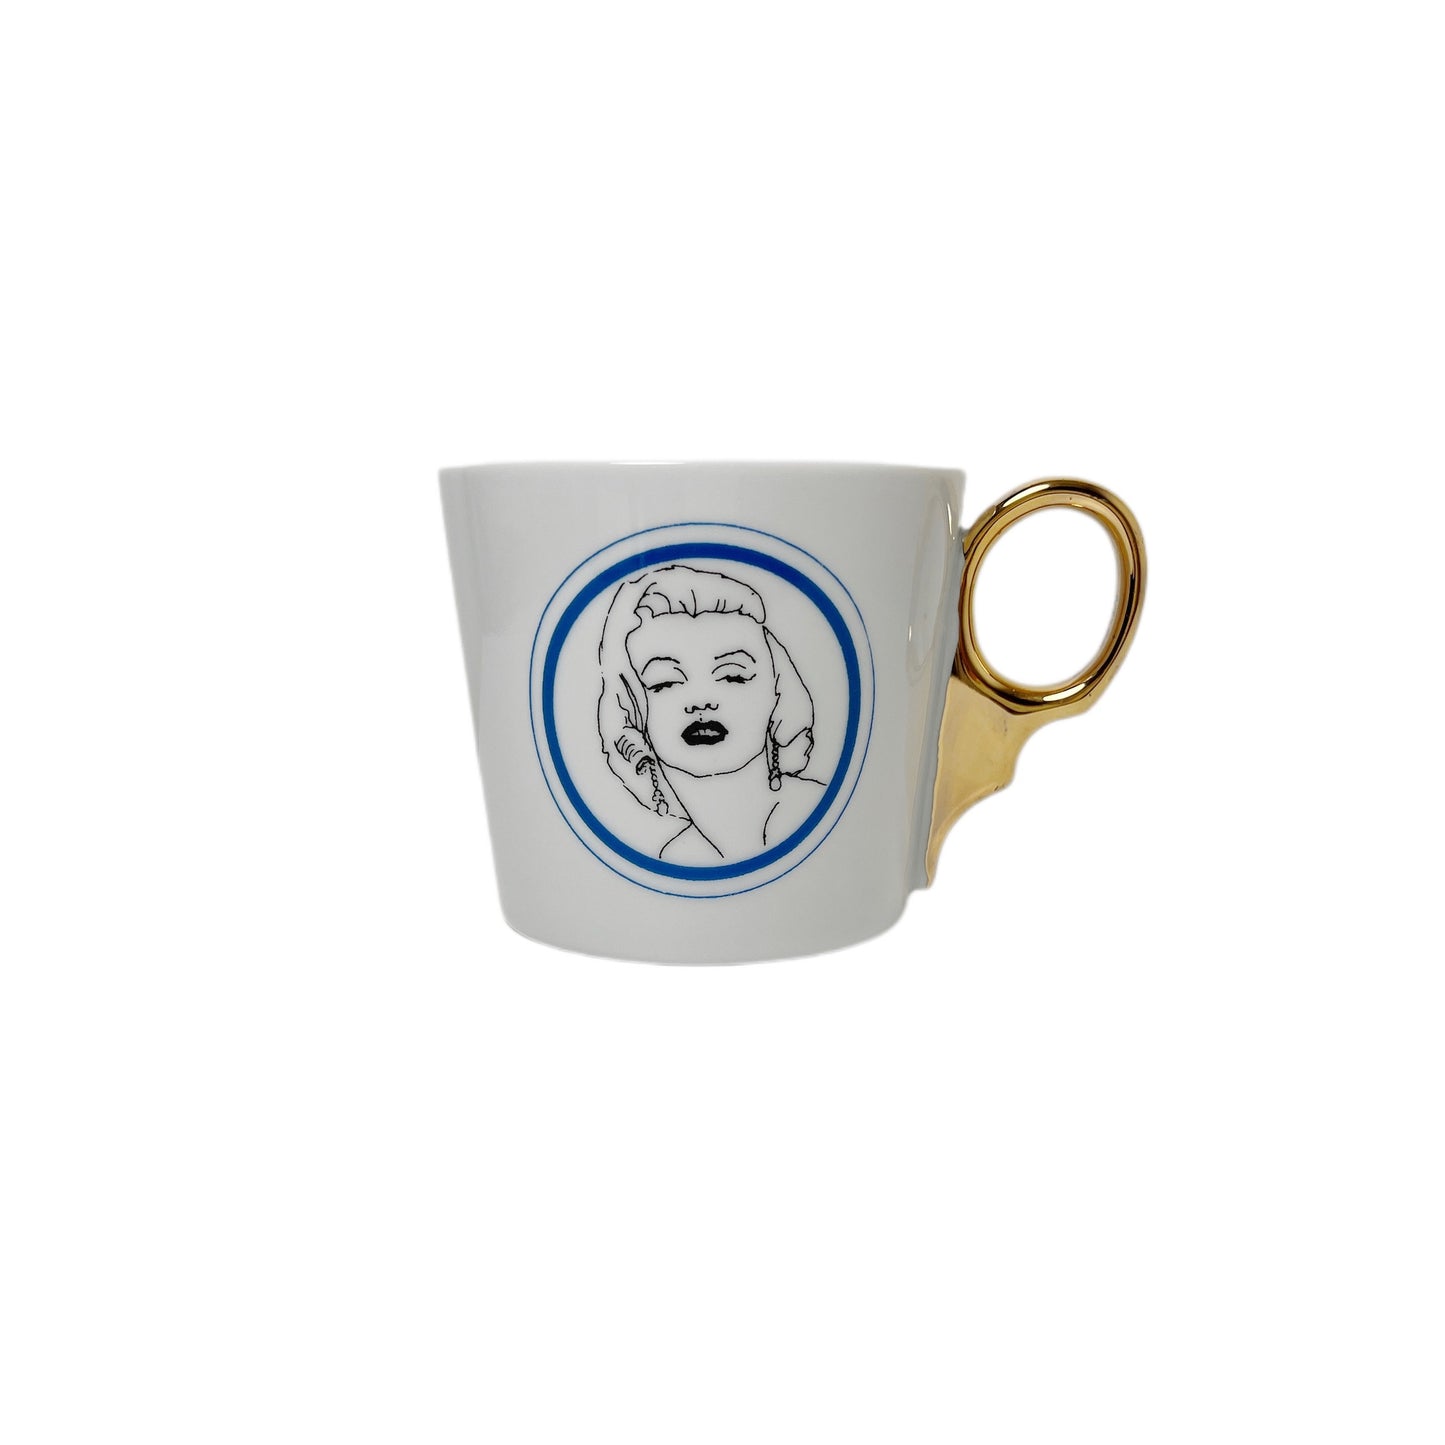 【Kuhn Keramik】 ポートレートマグカップ Marilyn Monroe